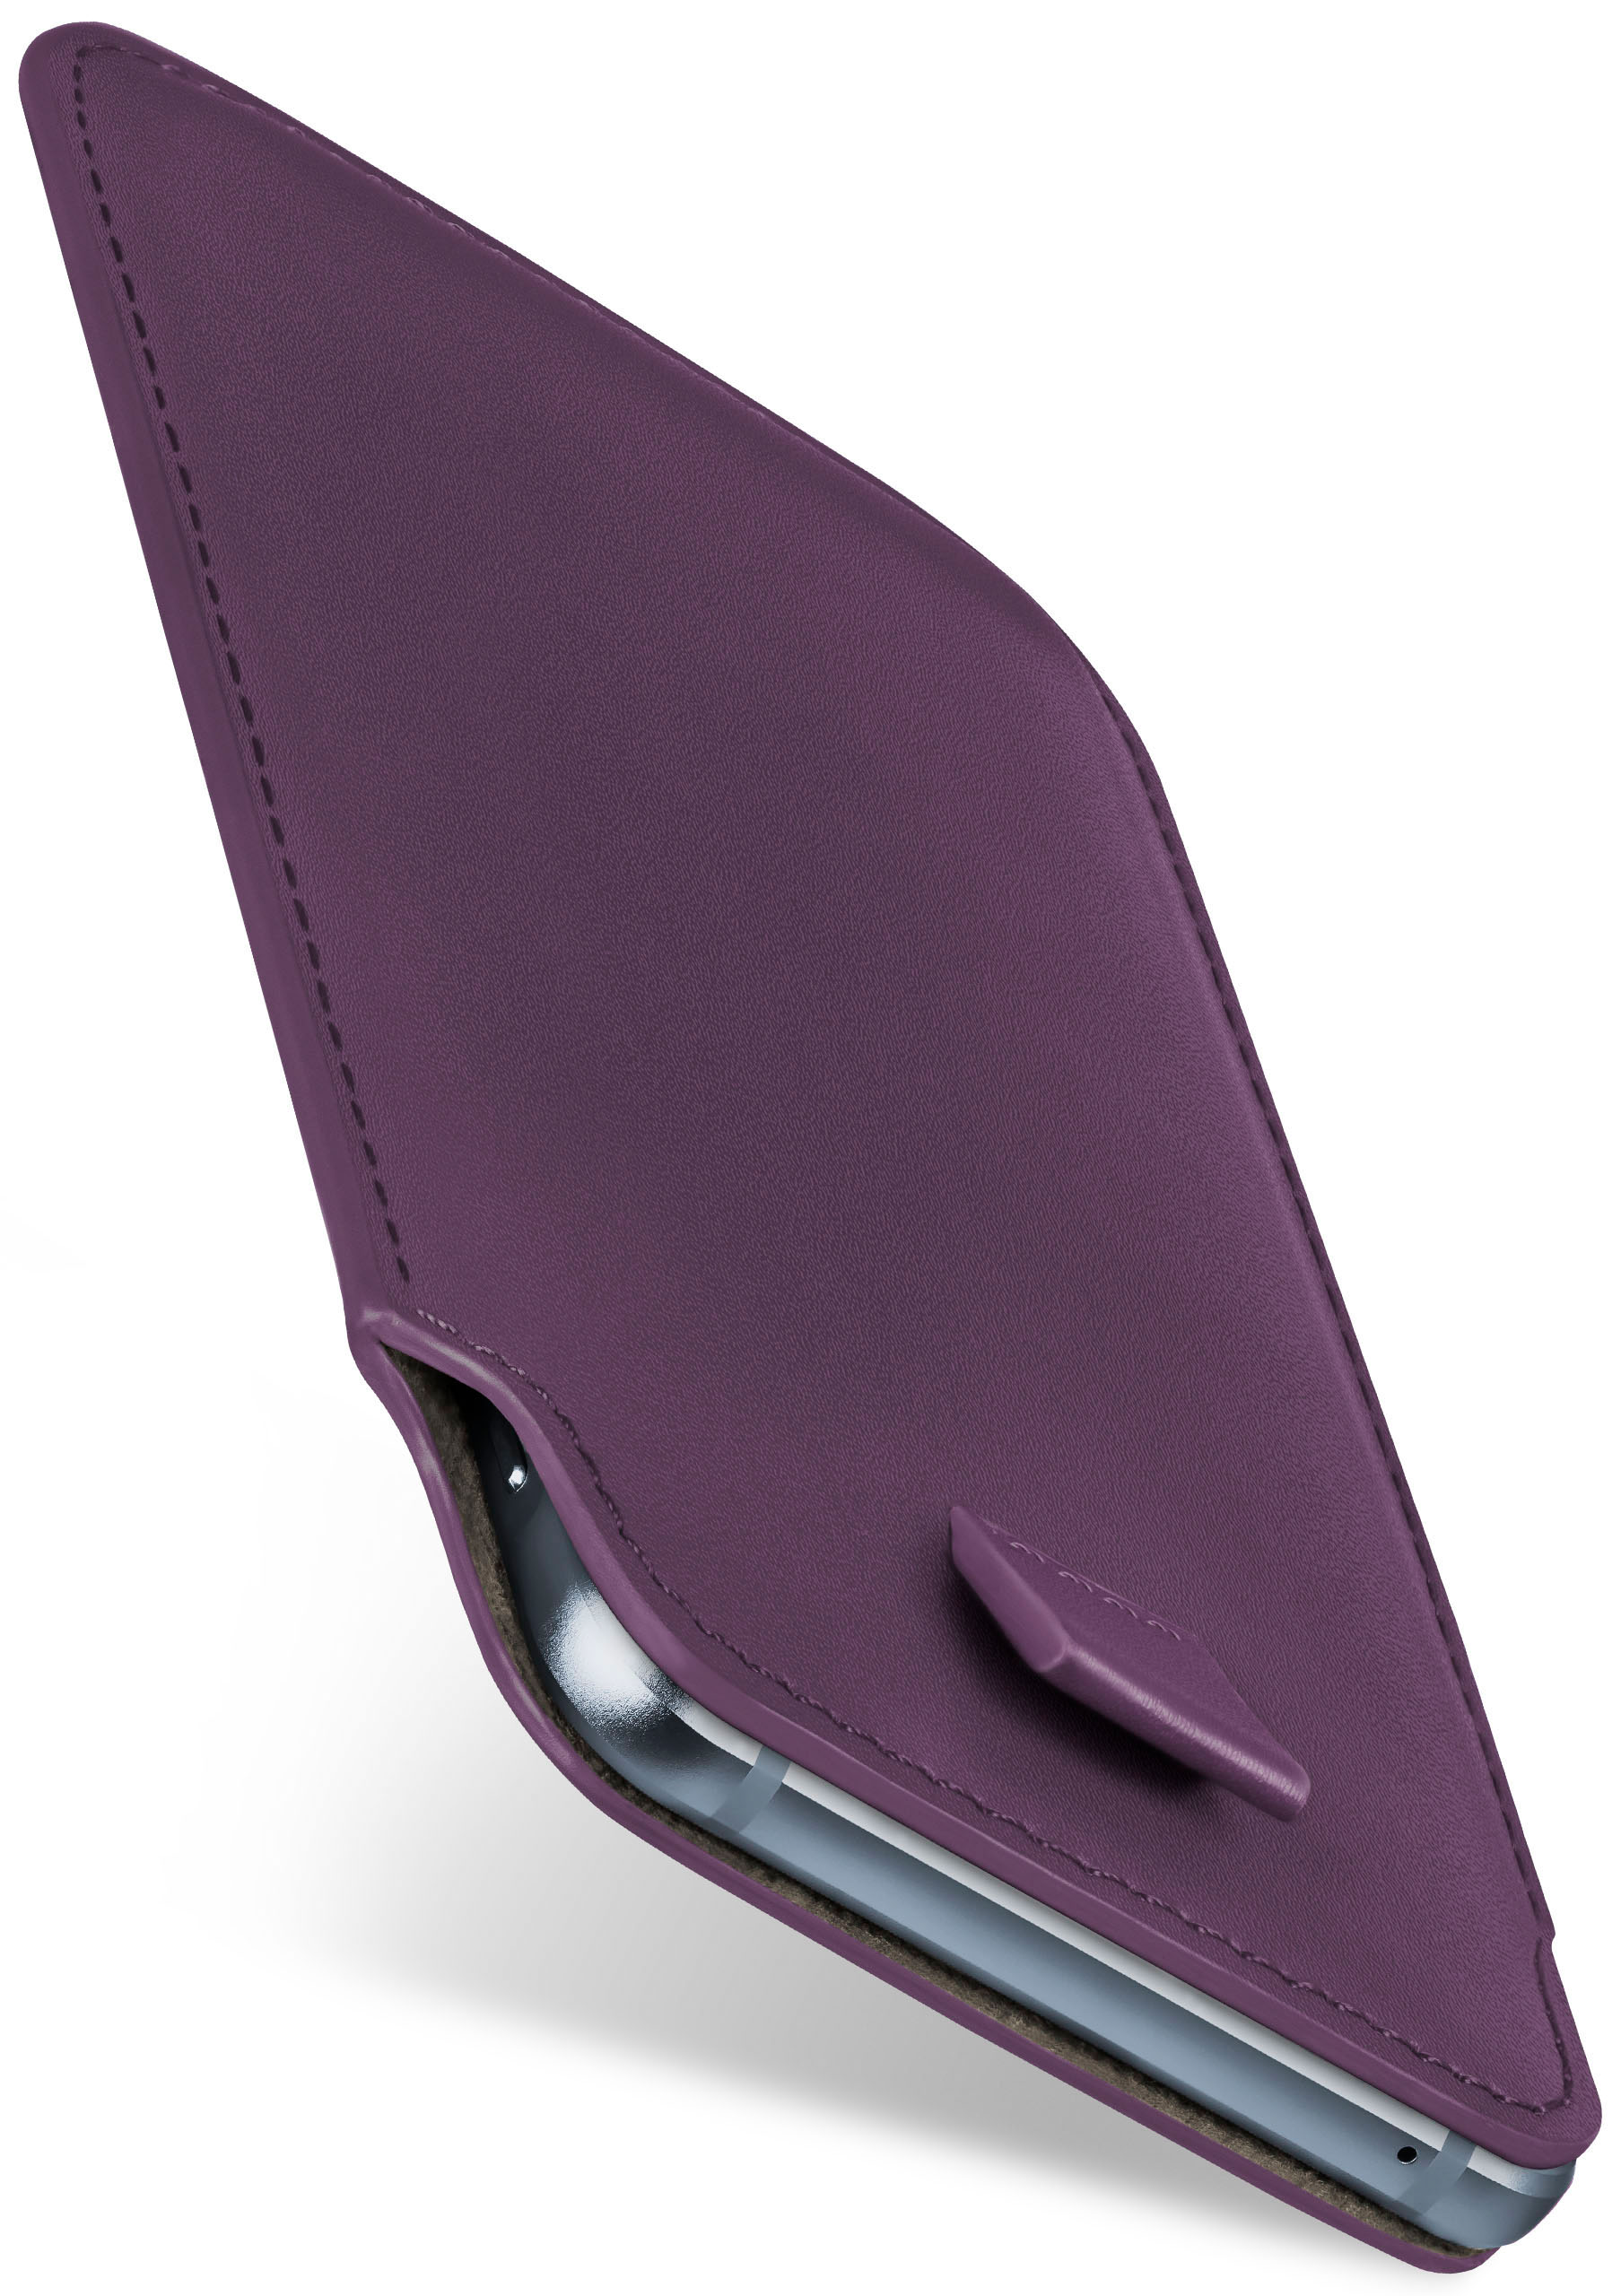 MOEX Slide CAT, Case, Cover, S60, Indigo-Violet Full